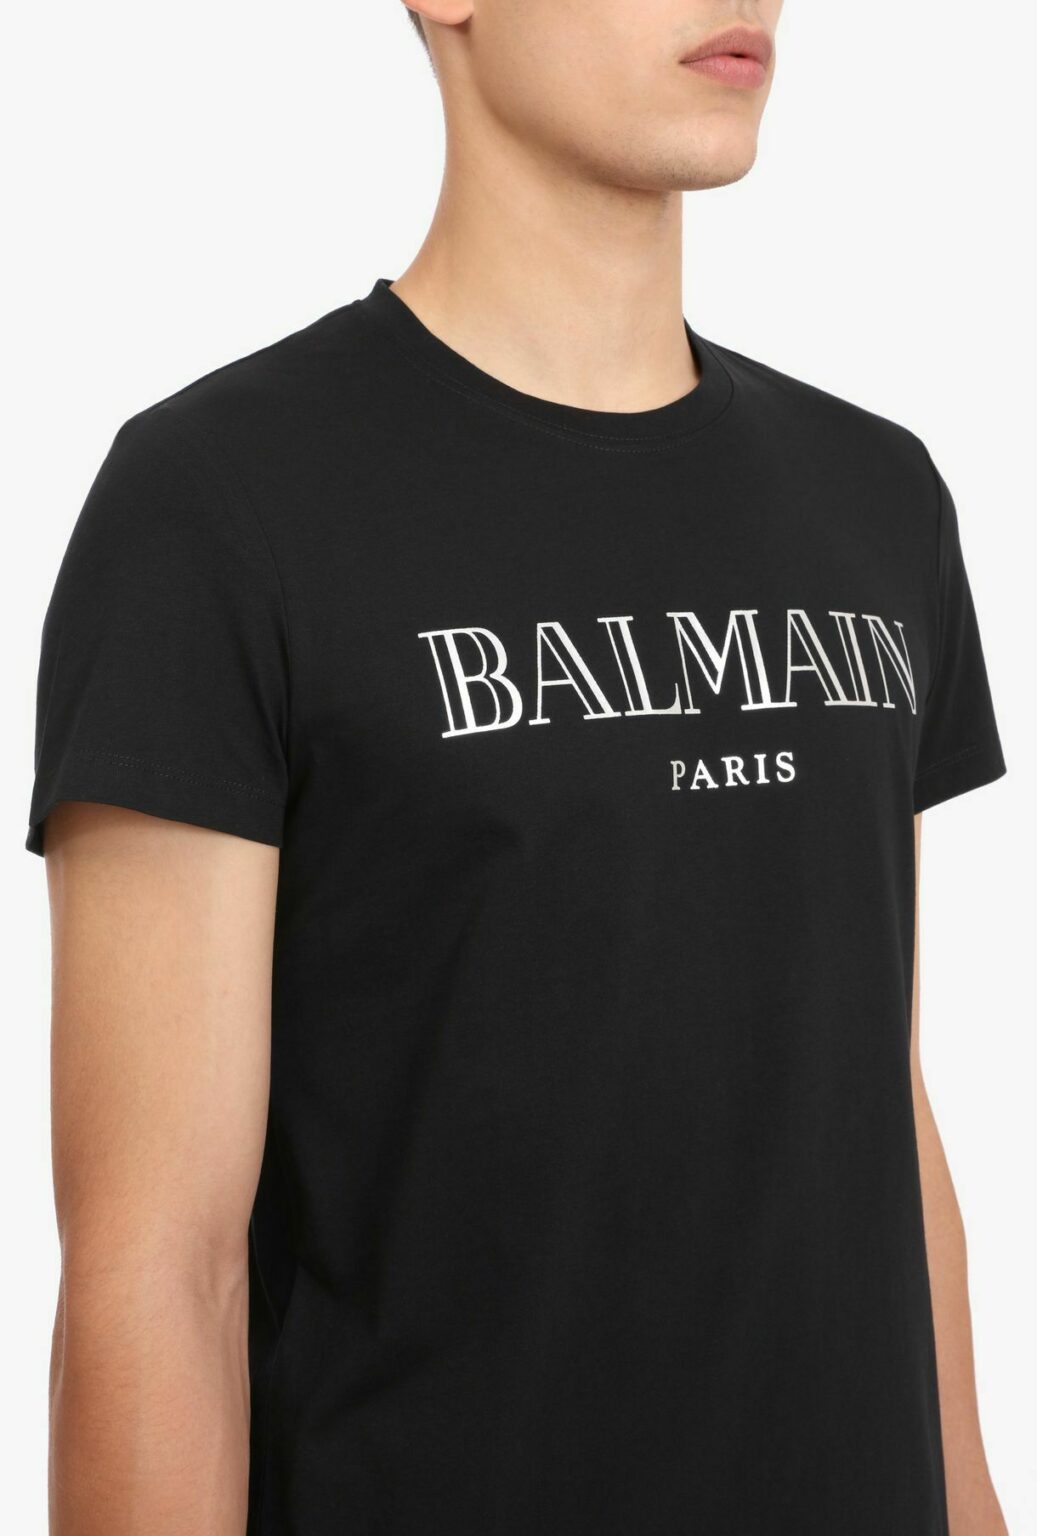 Is Balmain Luxury Brand | Paul Smith